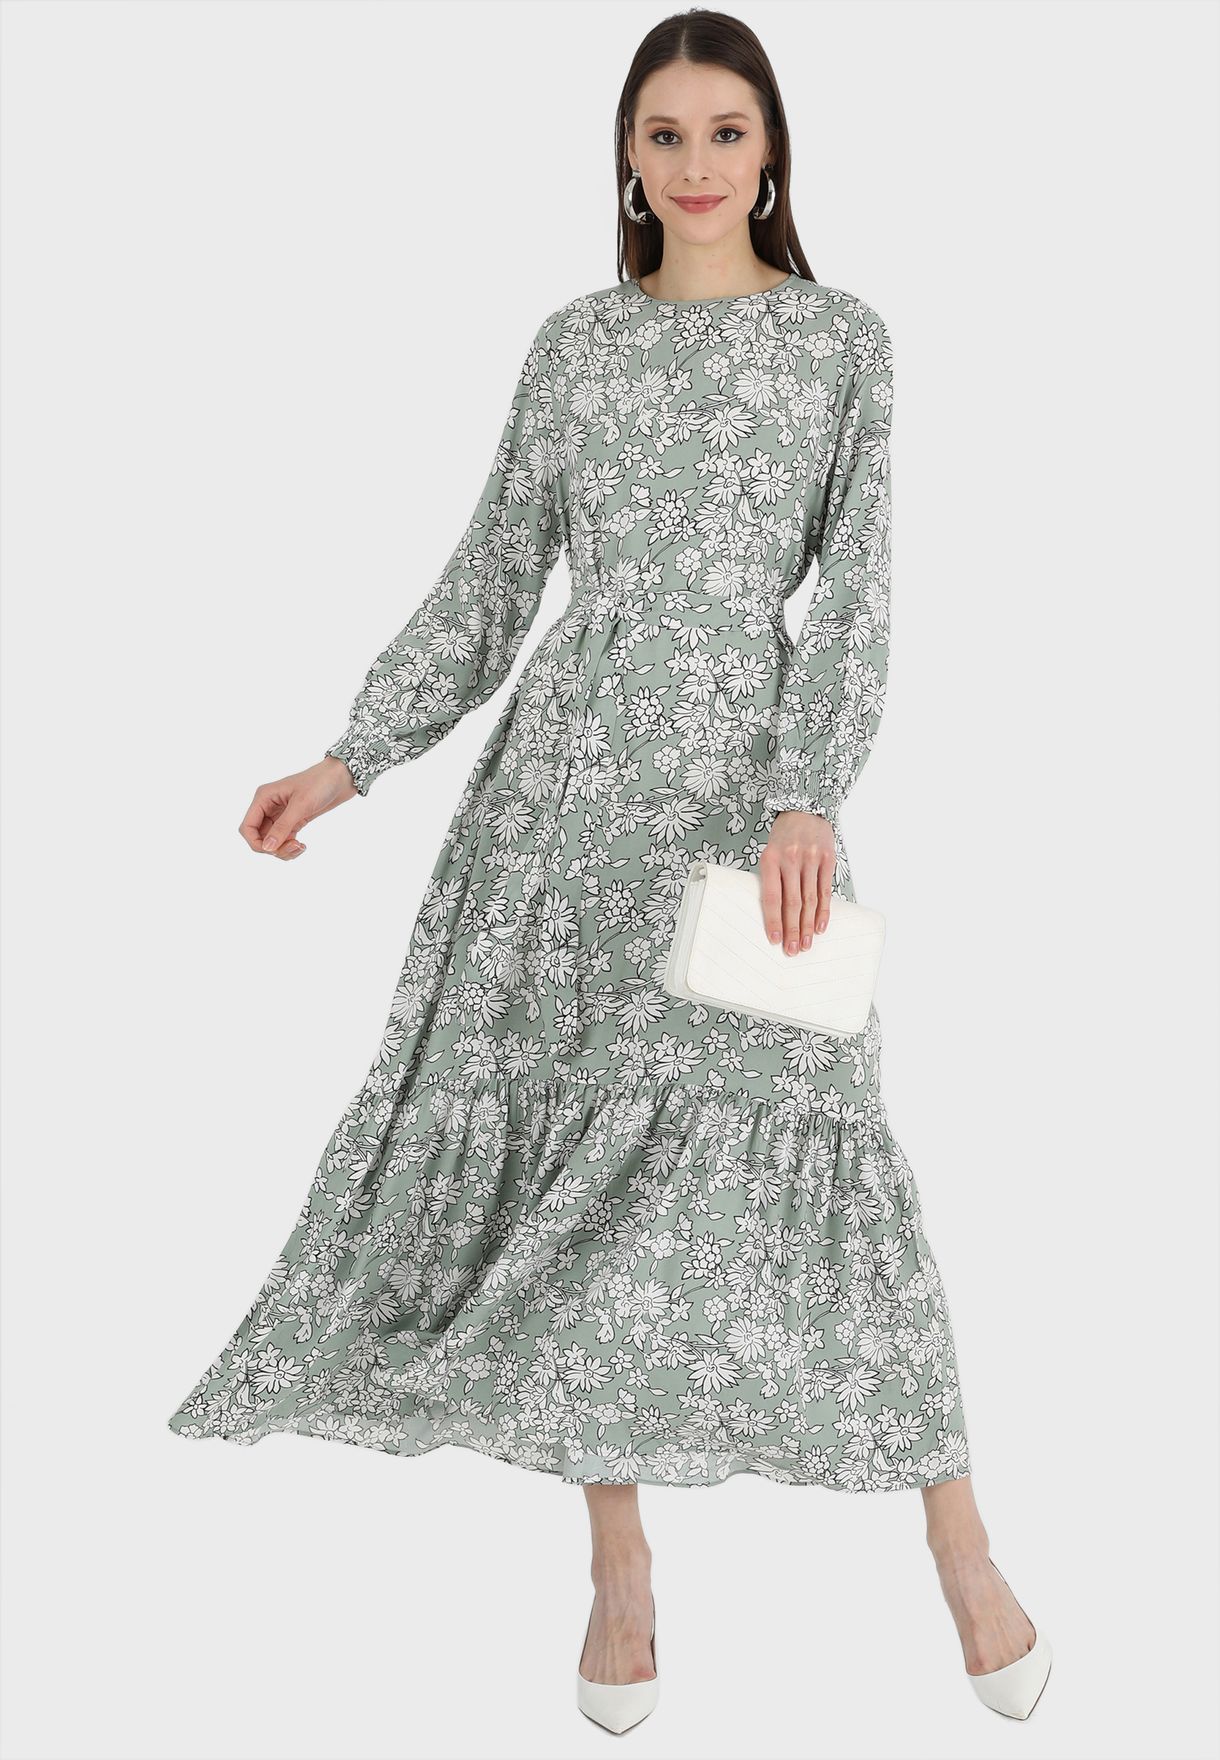 Belt Detail Floral Print Dress